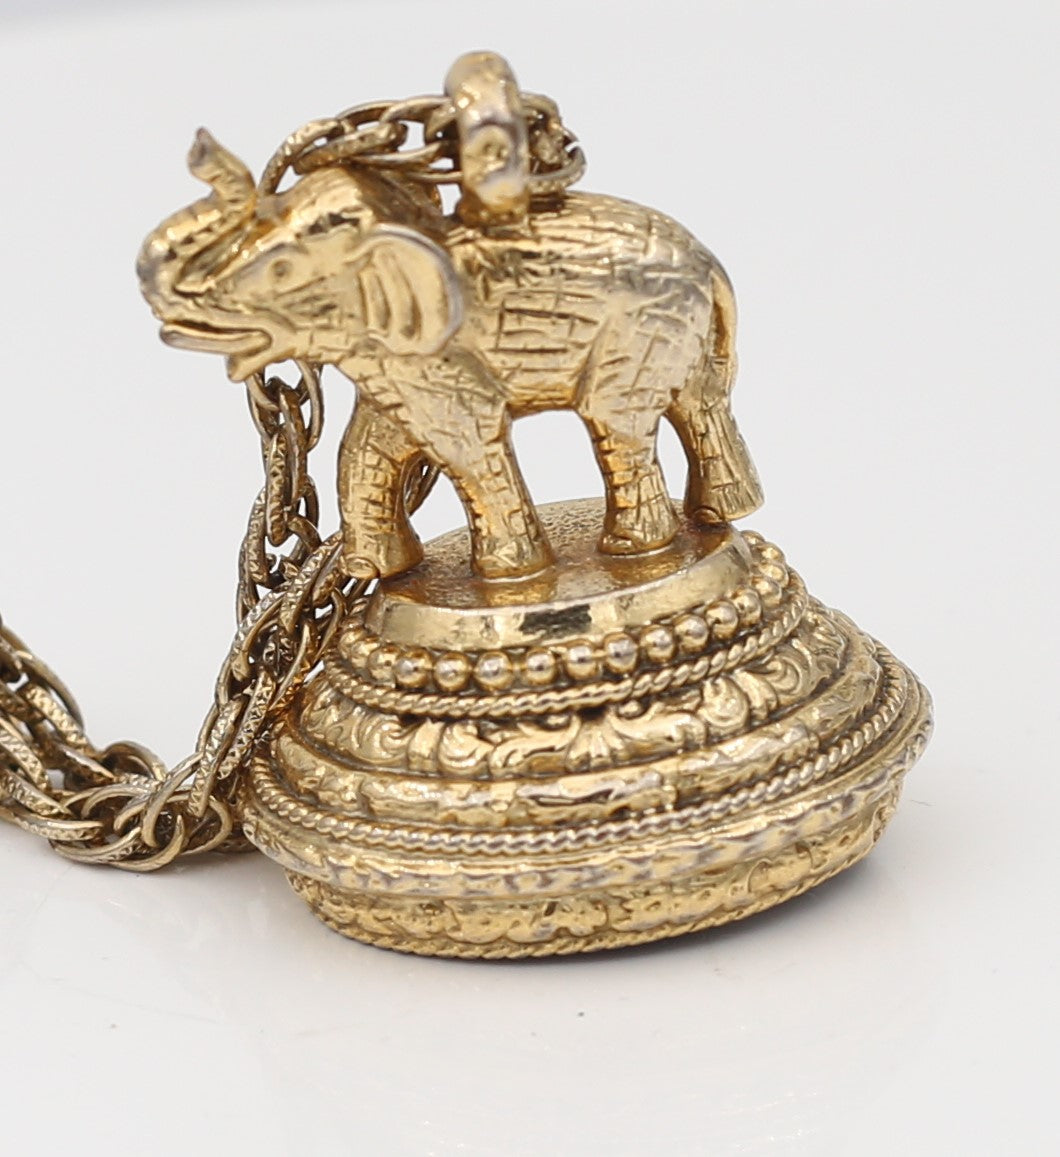 14K Elephant pendant on a chain necklace